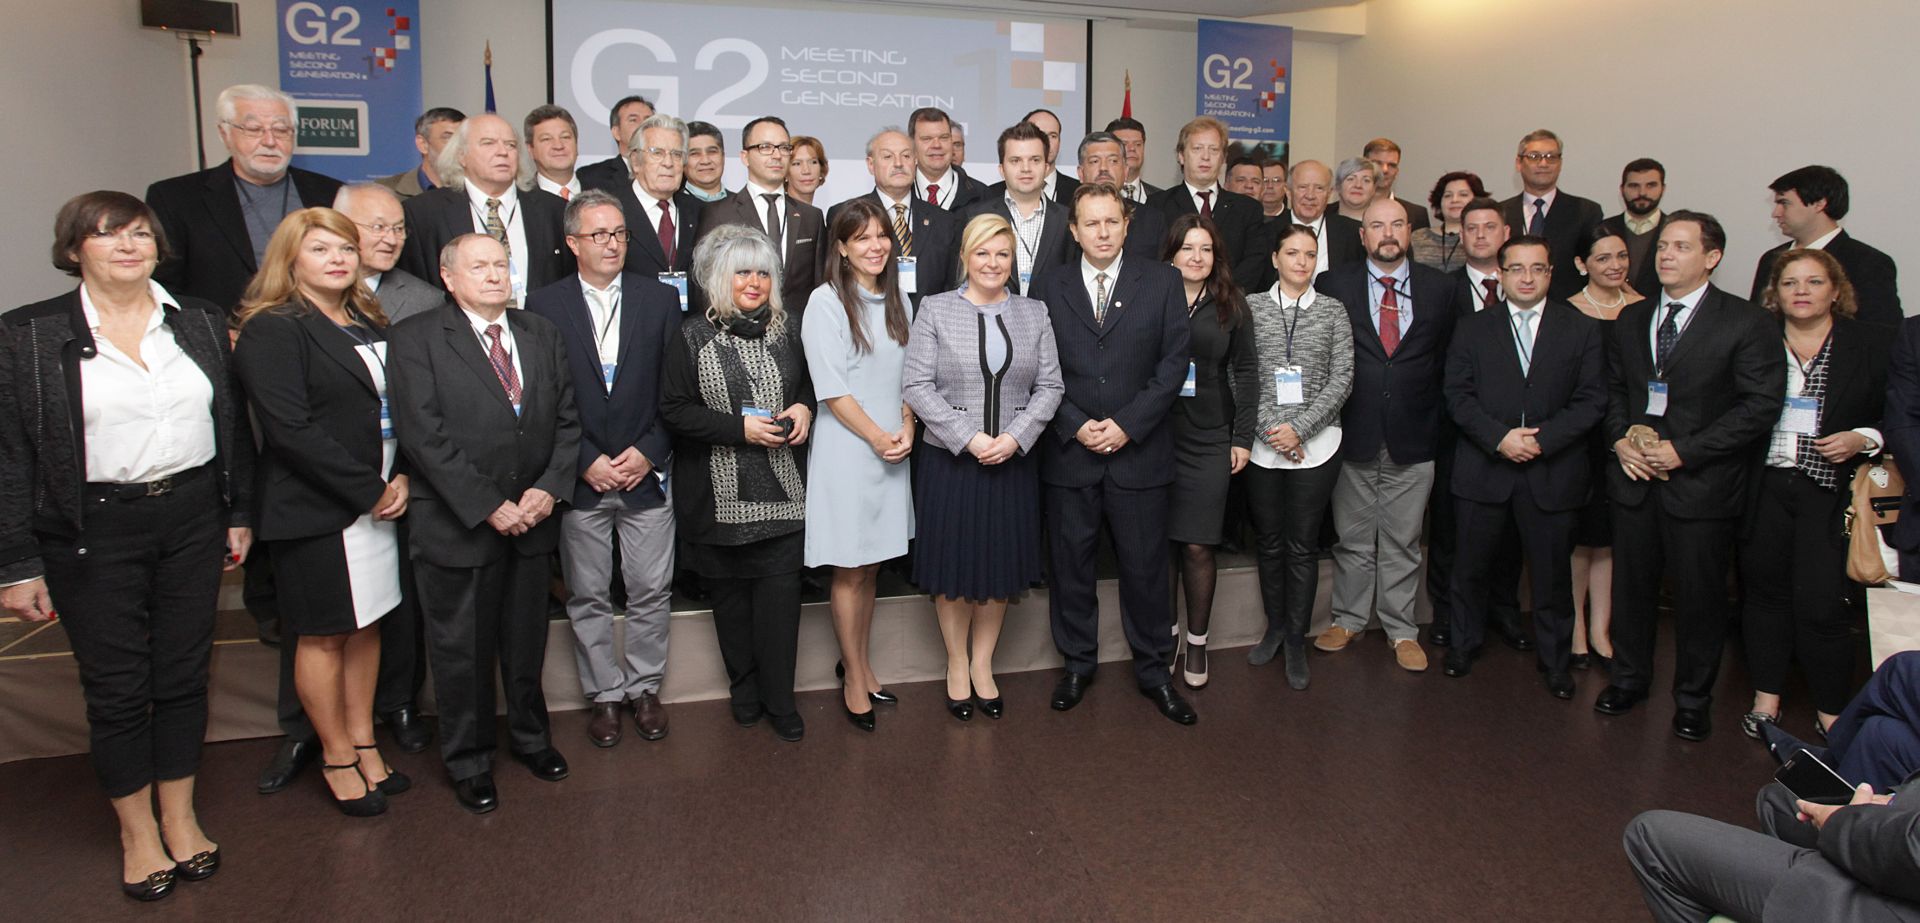 ZAPOČEO MEETING G2.1 Iseljeništvo je velik potencijal za rast i razvoj hrvatskog gospodarstva